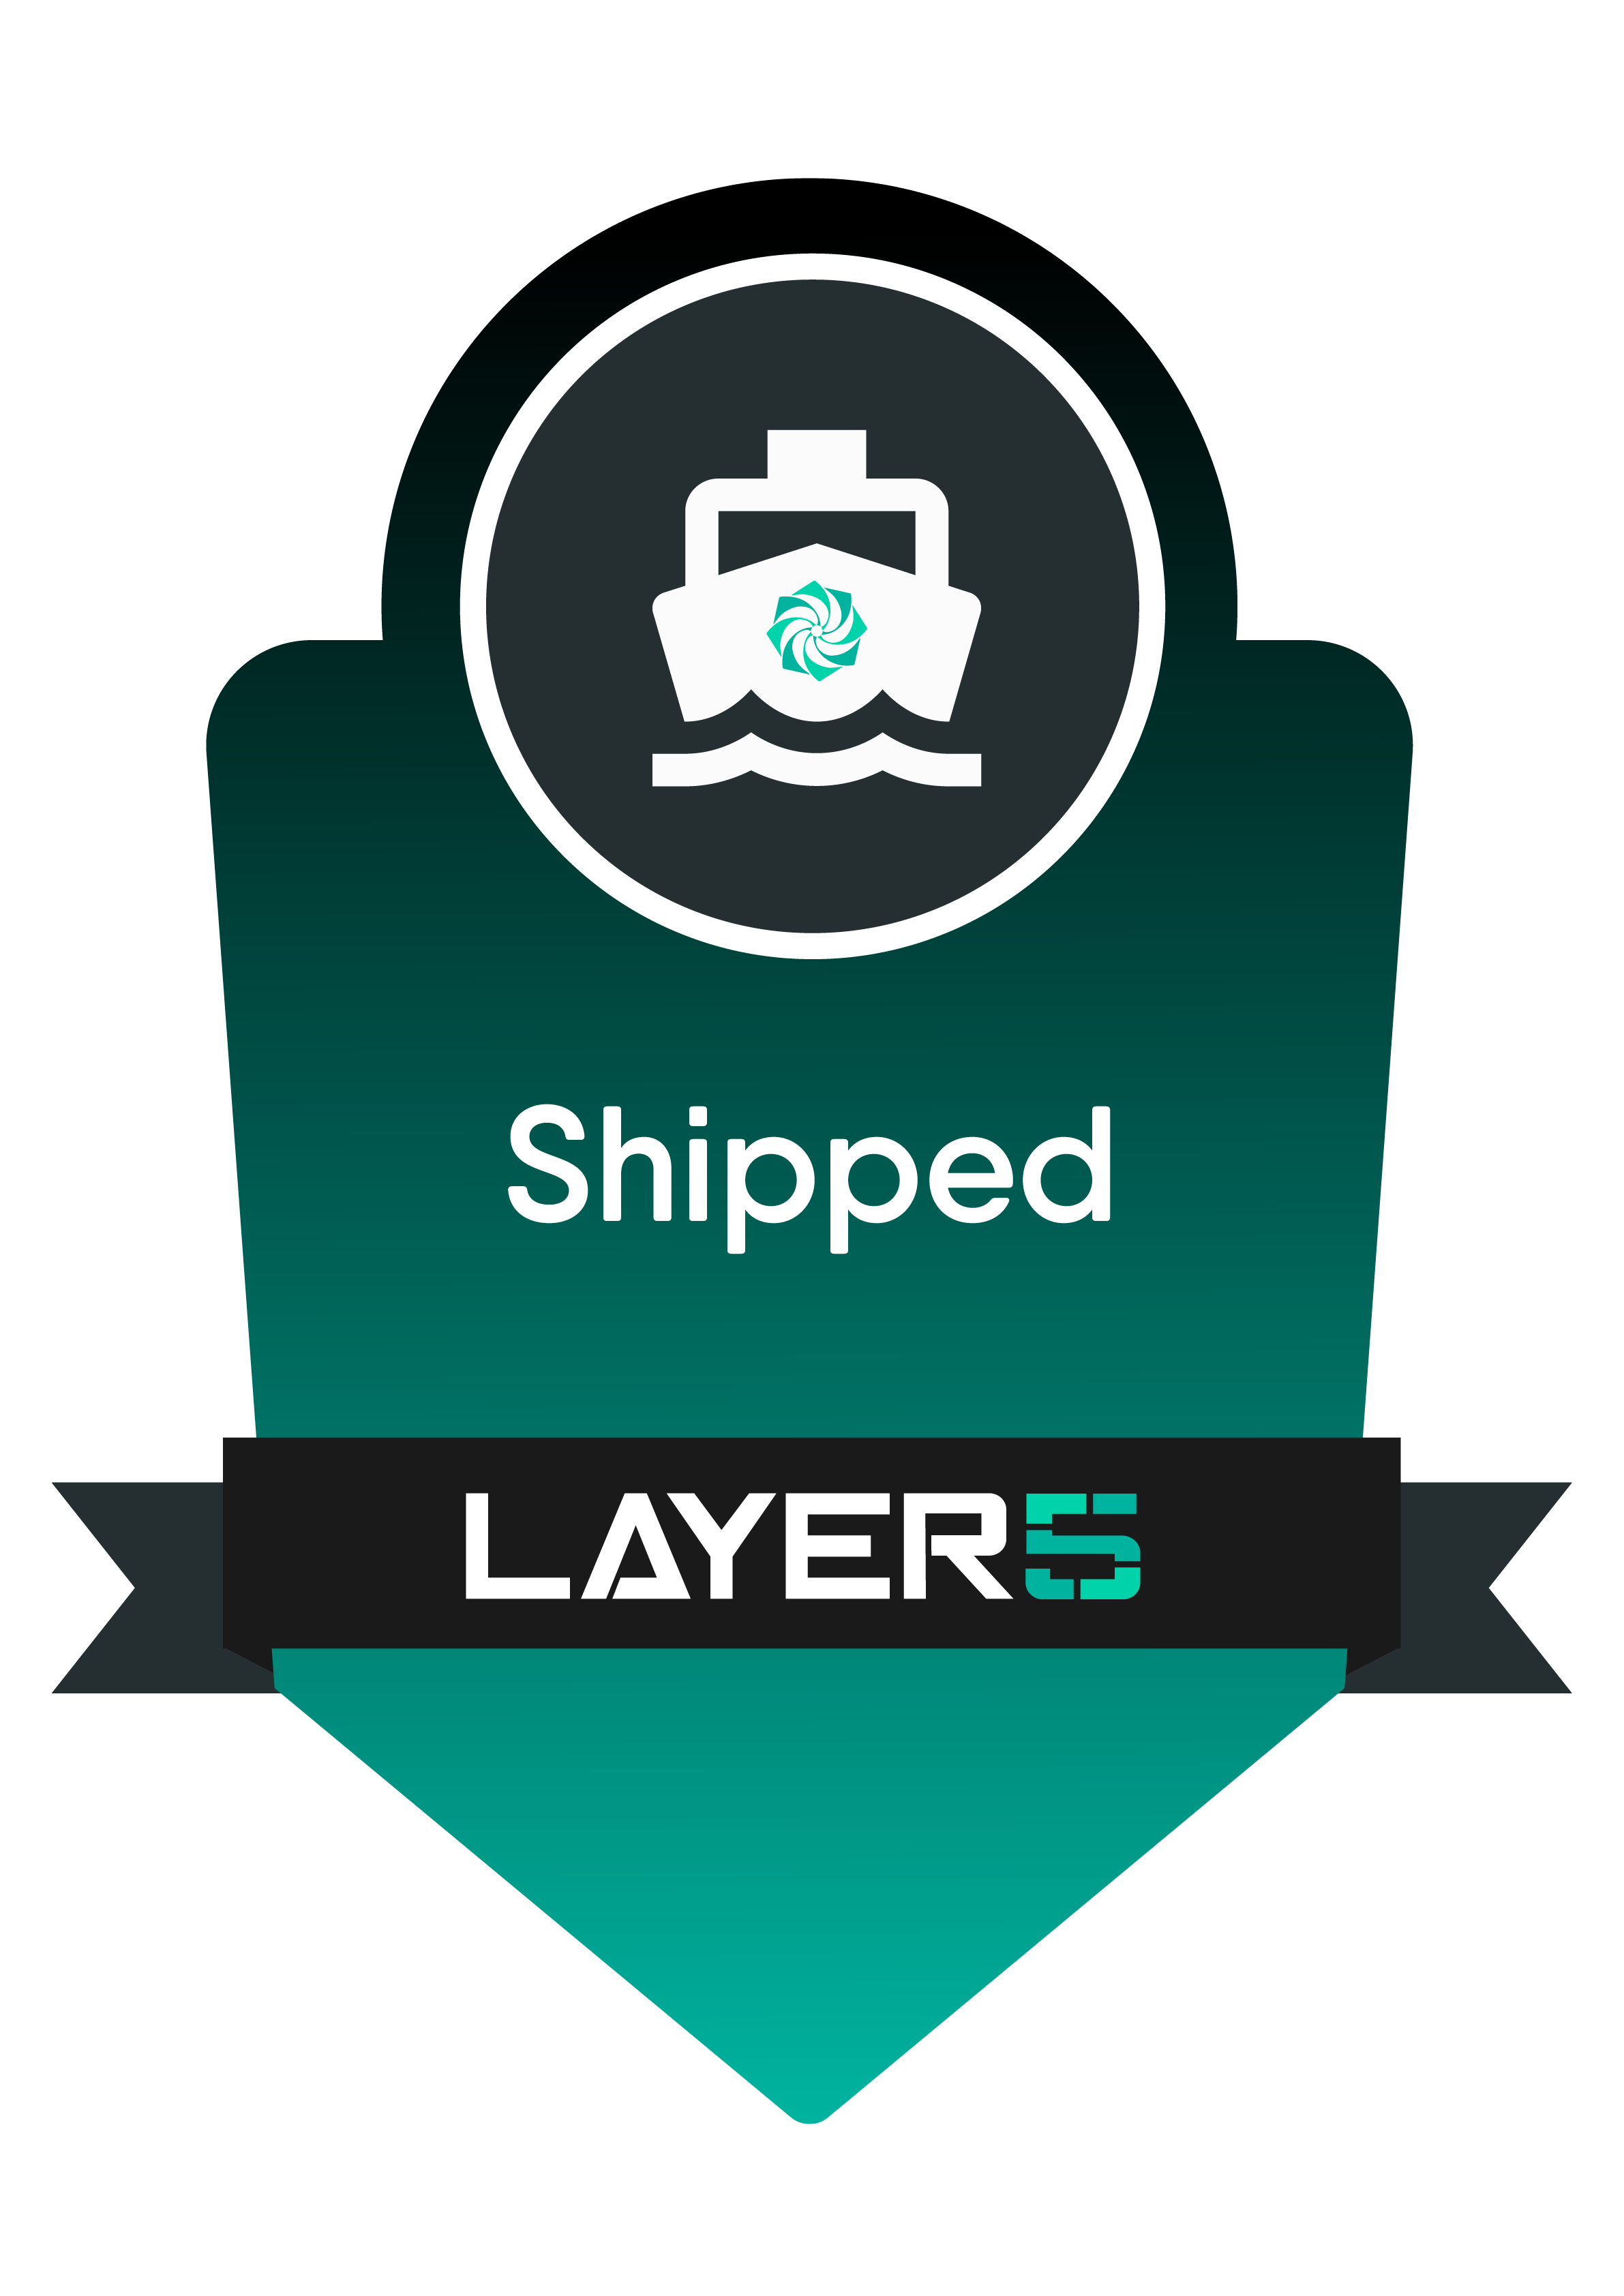 Layer5 badges